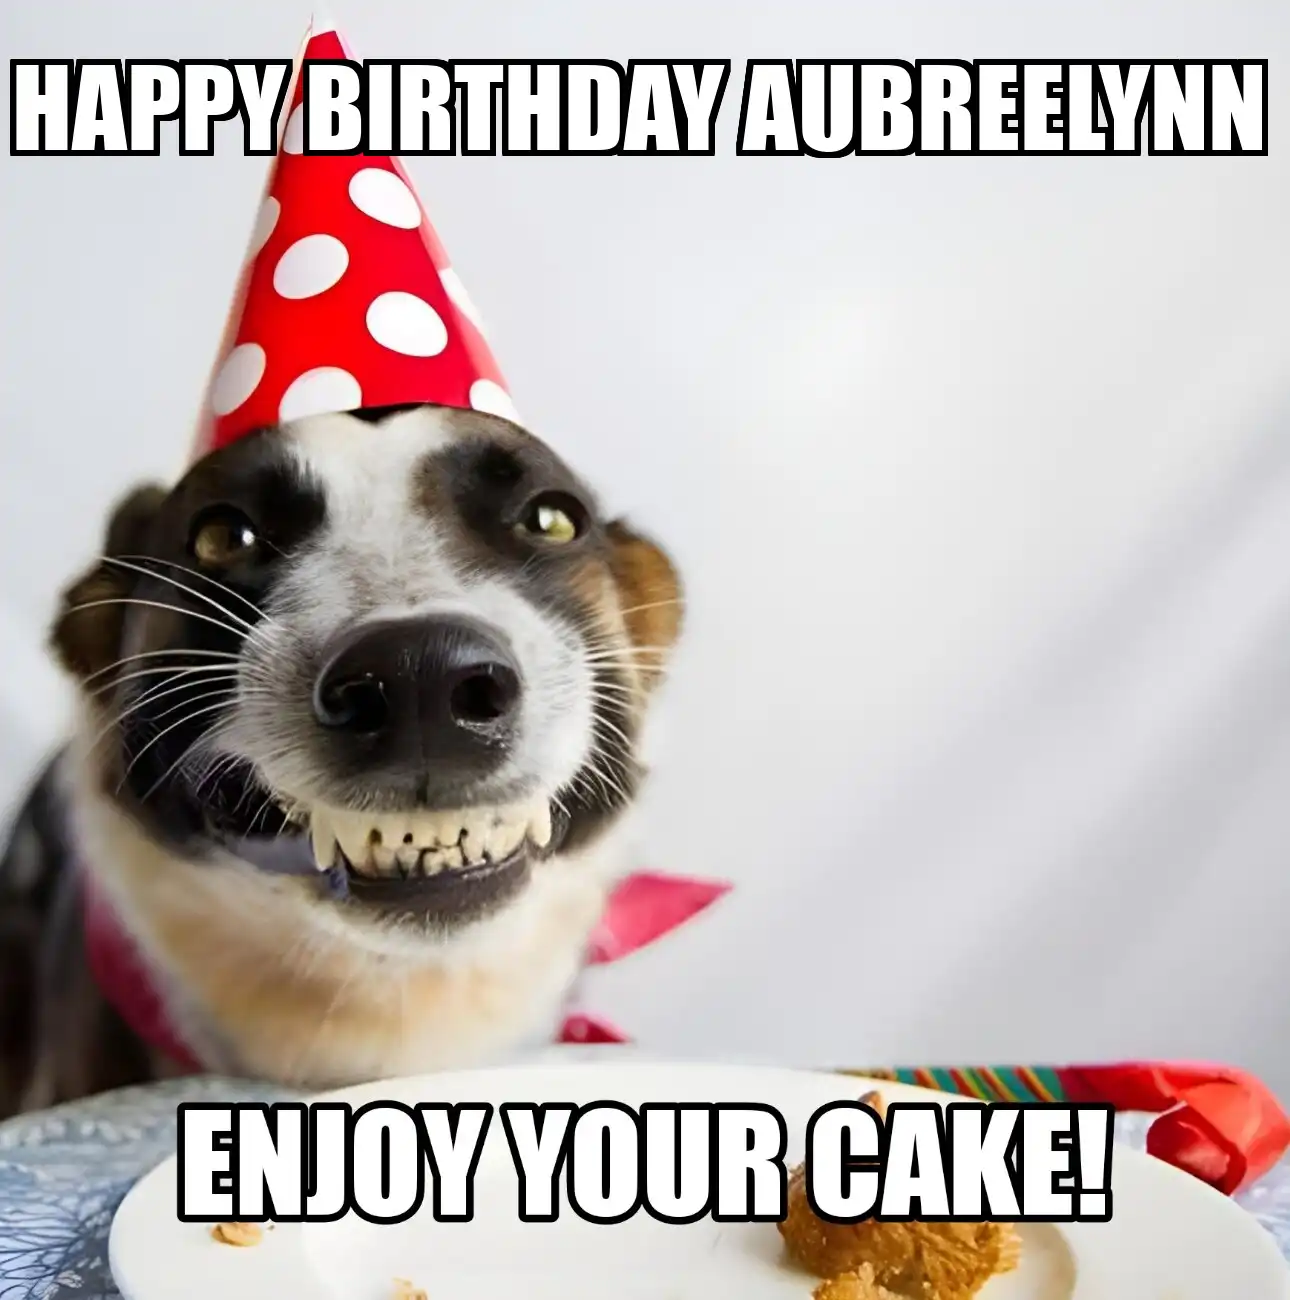 Happy Birthday Aubreelynn Enjoy Your Cake Dog Meme